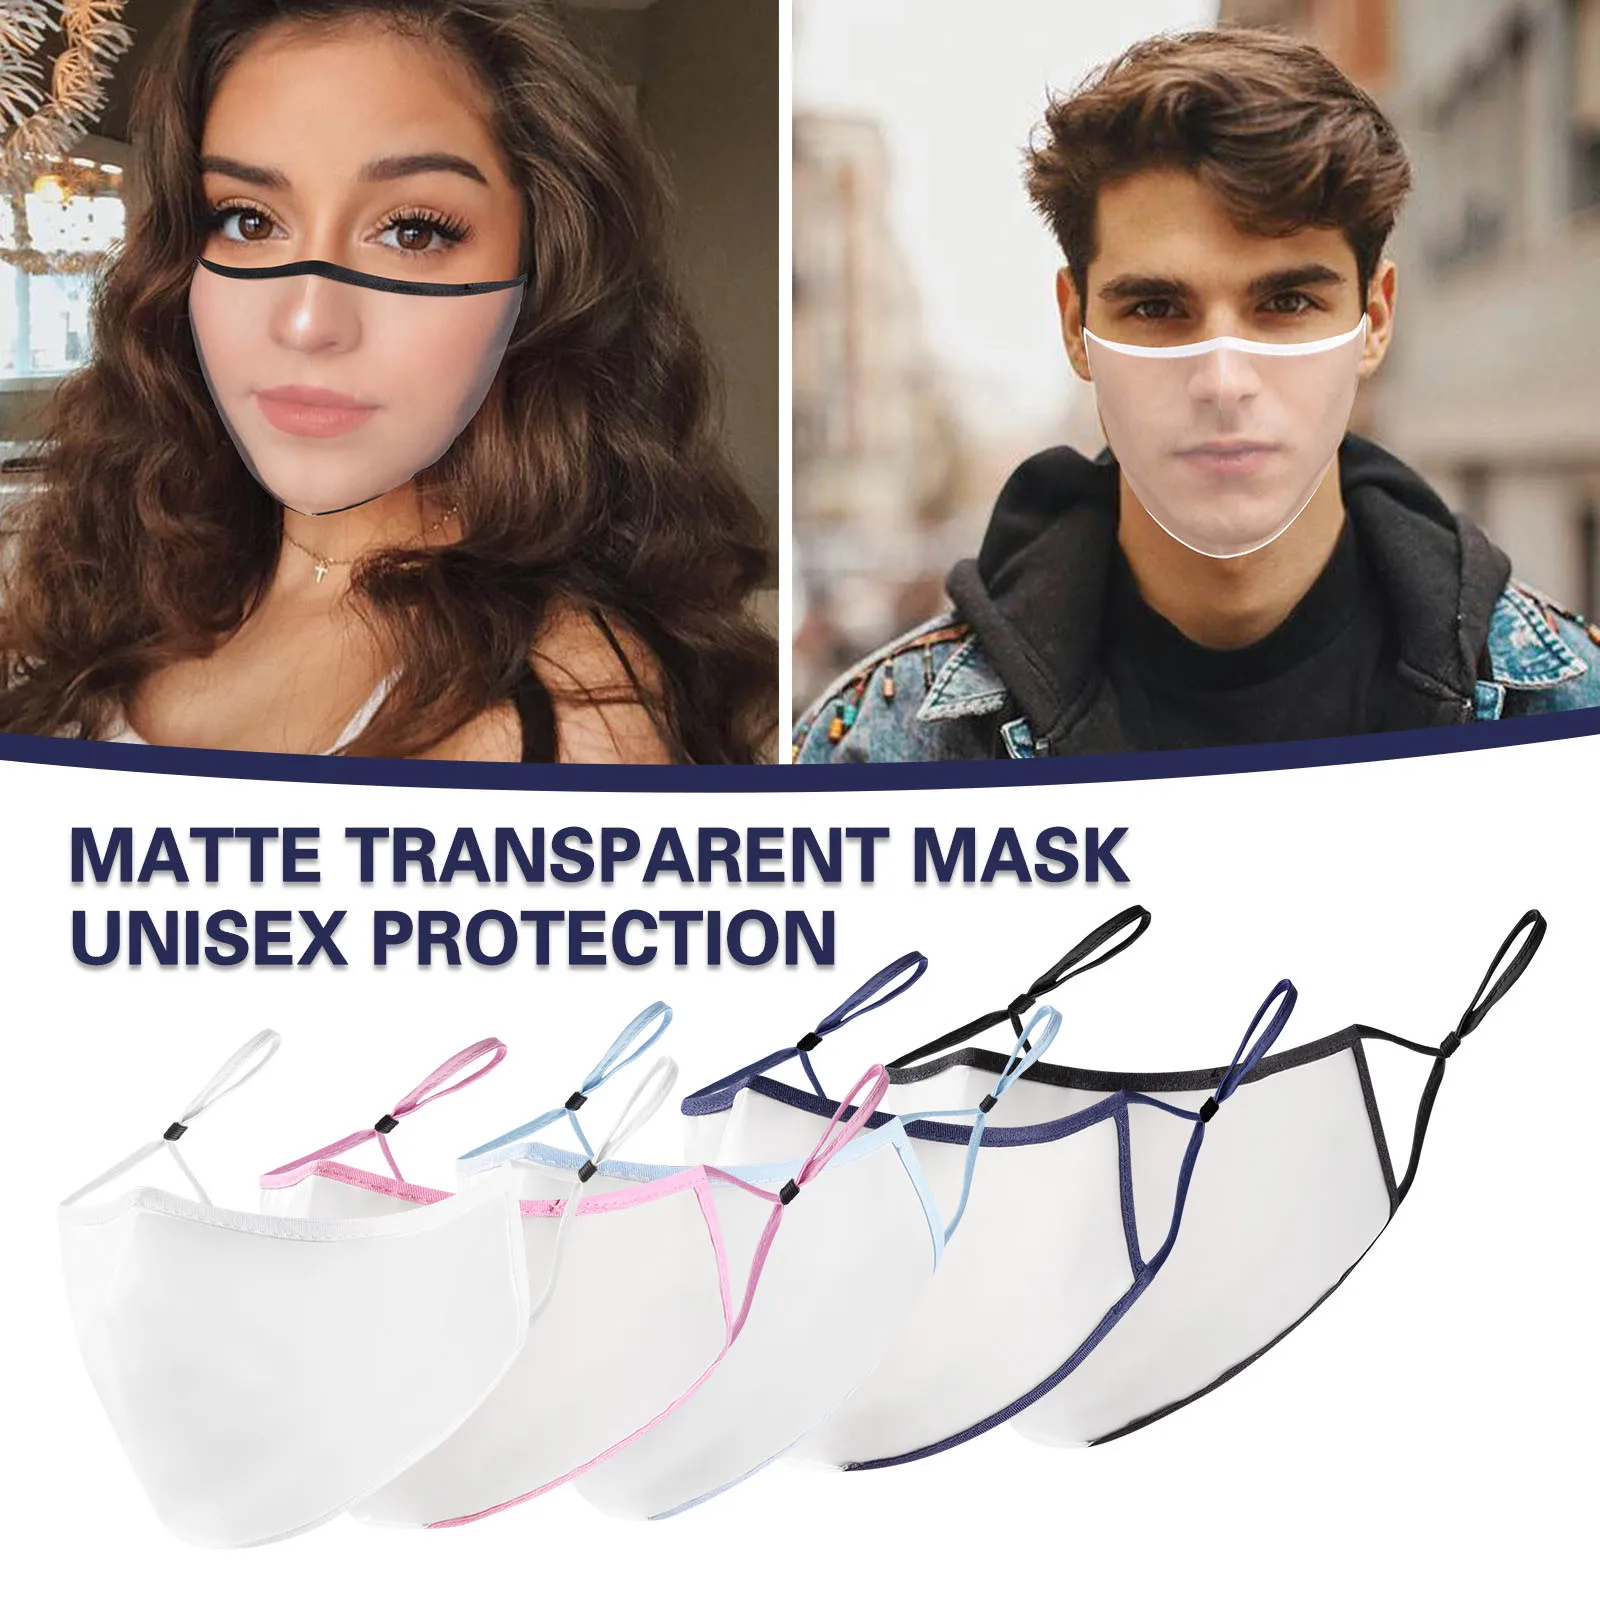 

Adult unisex Lip Language Scrub Transparent Mask Three-Dimensional Washable Reusable Dustproof Masks Face Cover mascarillas